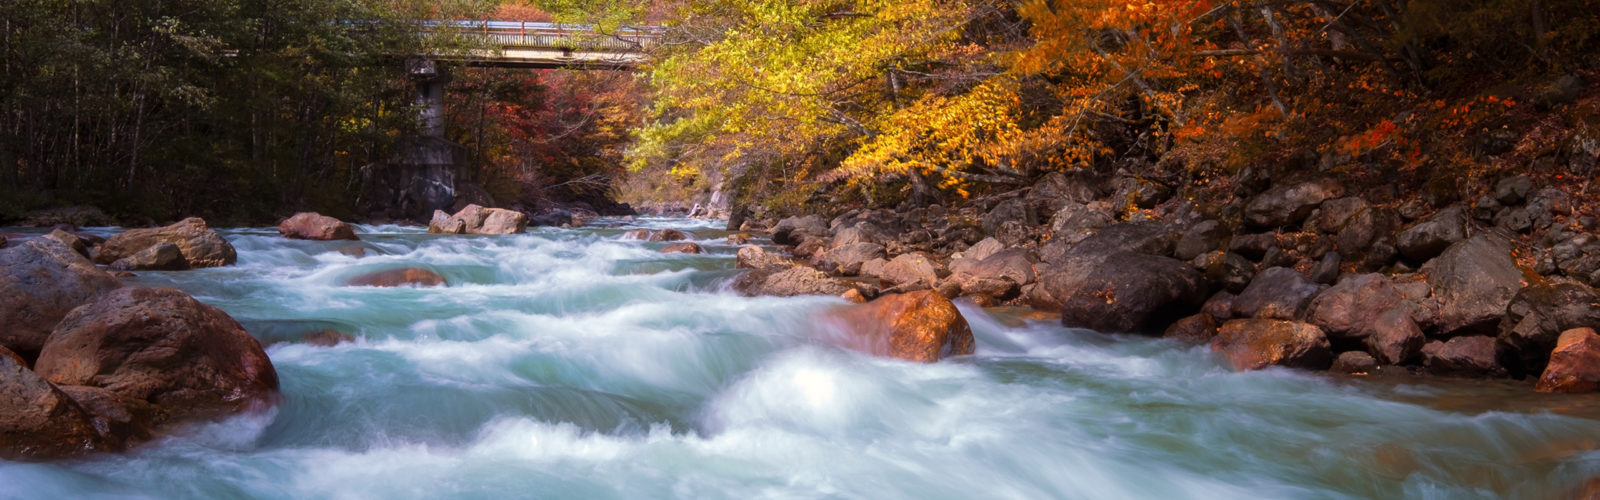 japanese-alps-autumn-river